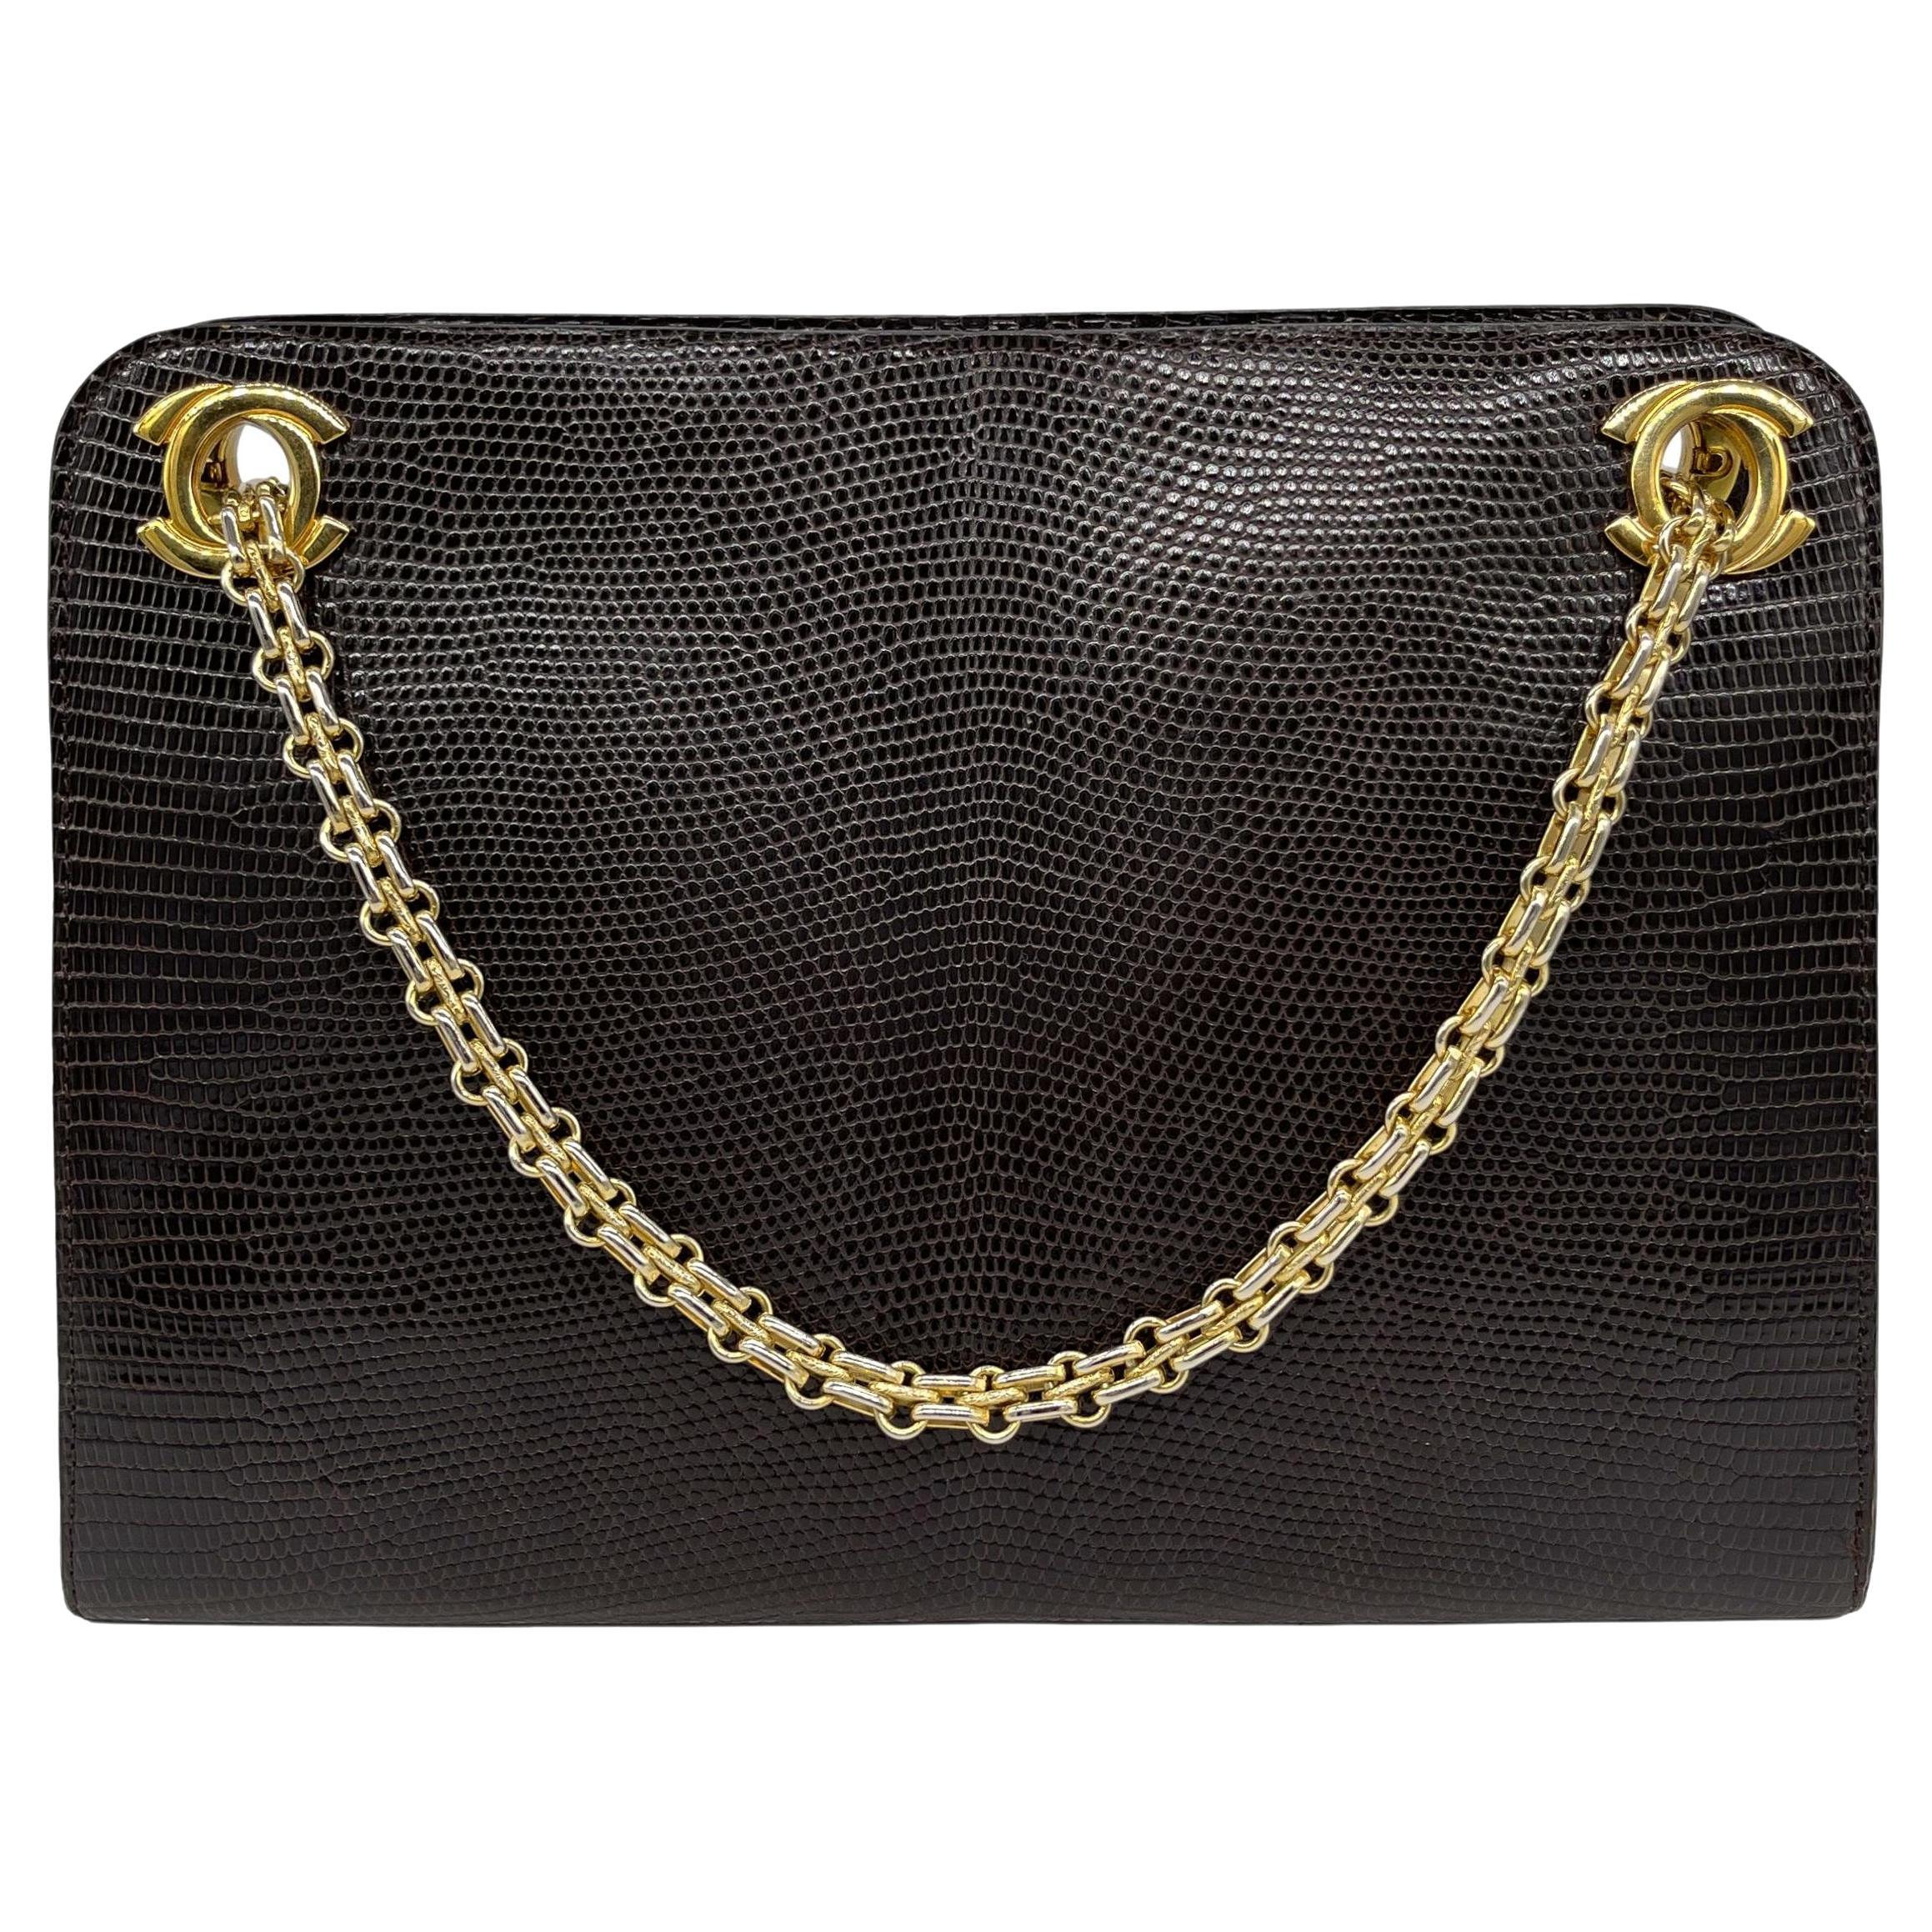 Chanel Vintage Lizard CC Bijoux Chain Shoulder Bag with Gold Hardware, 1980.